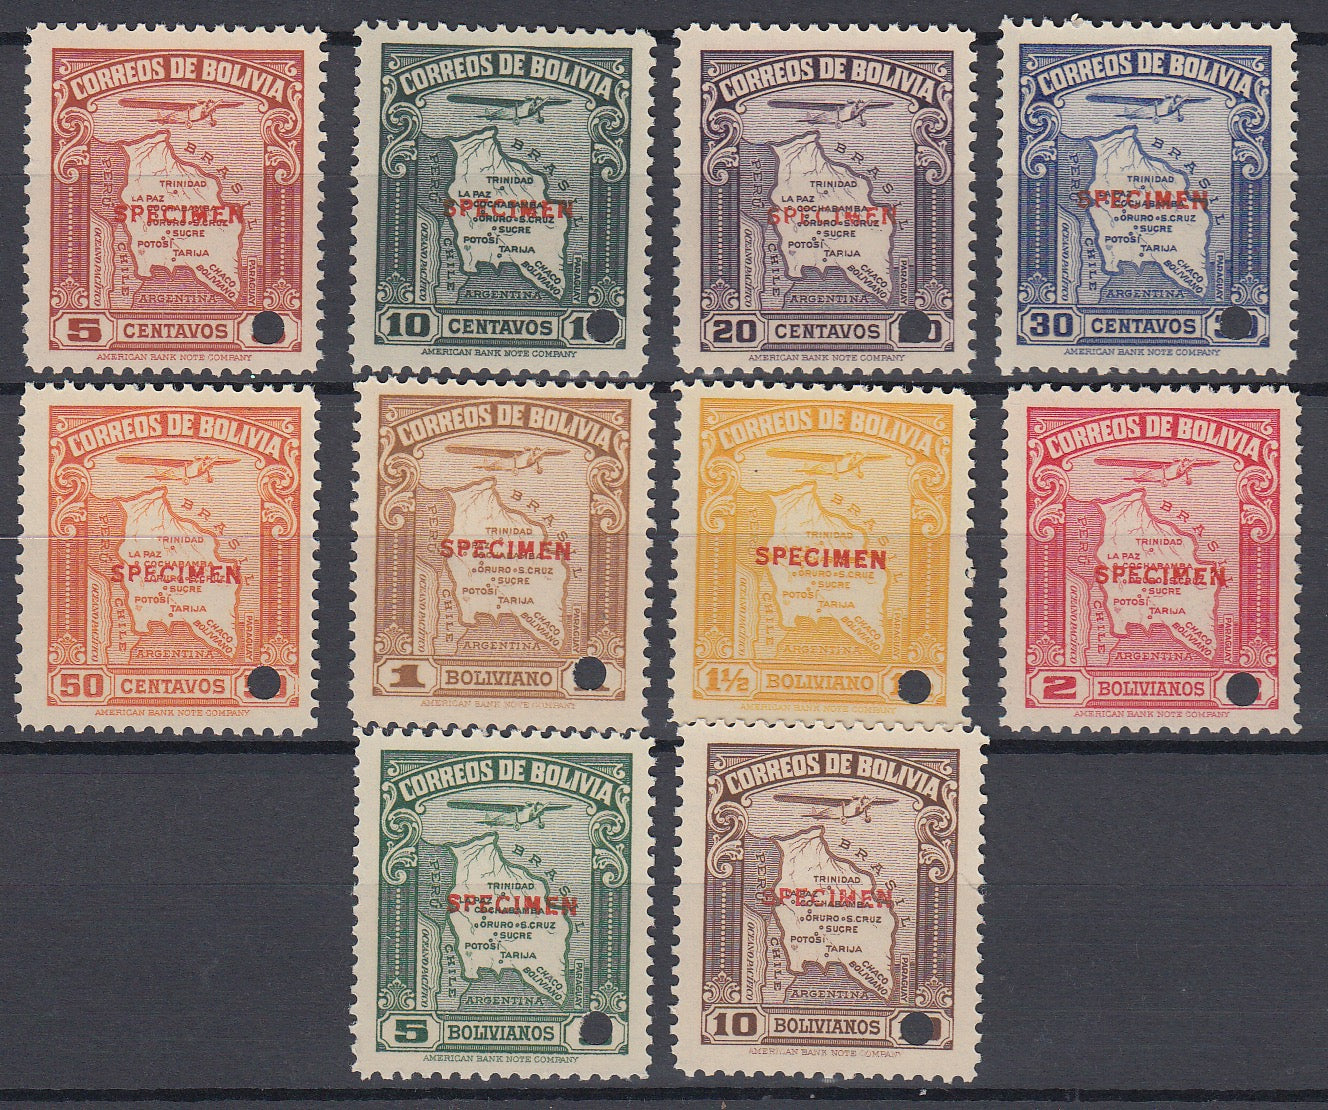 Bolivia 1935 Complete Airmail Set with Specimen overprint. MNH. Scott C42-51var